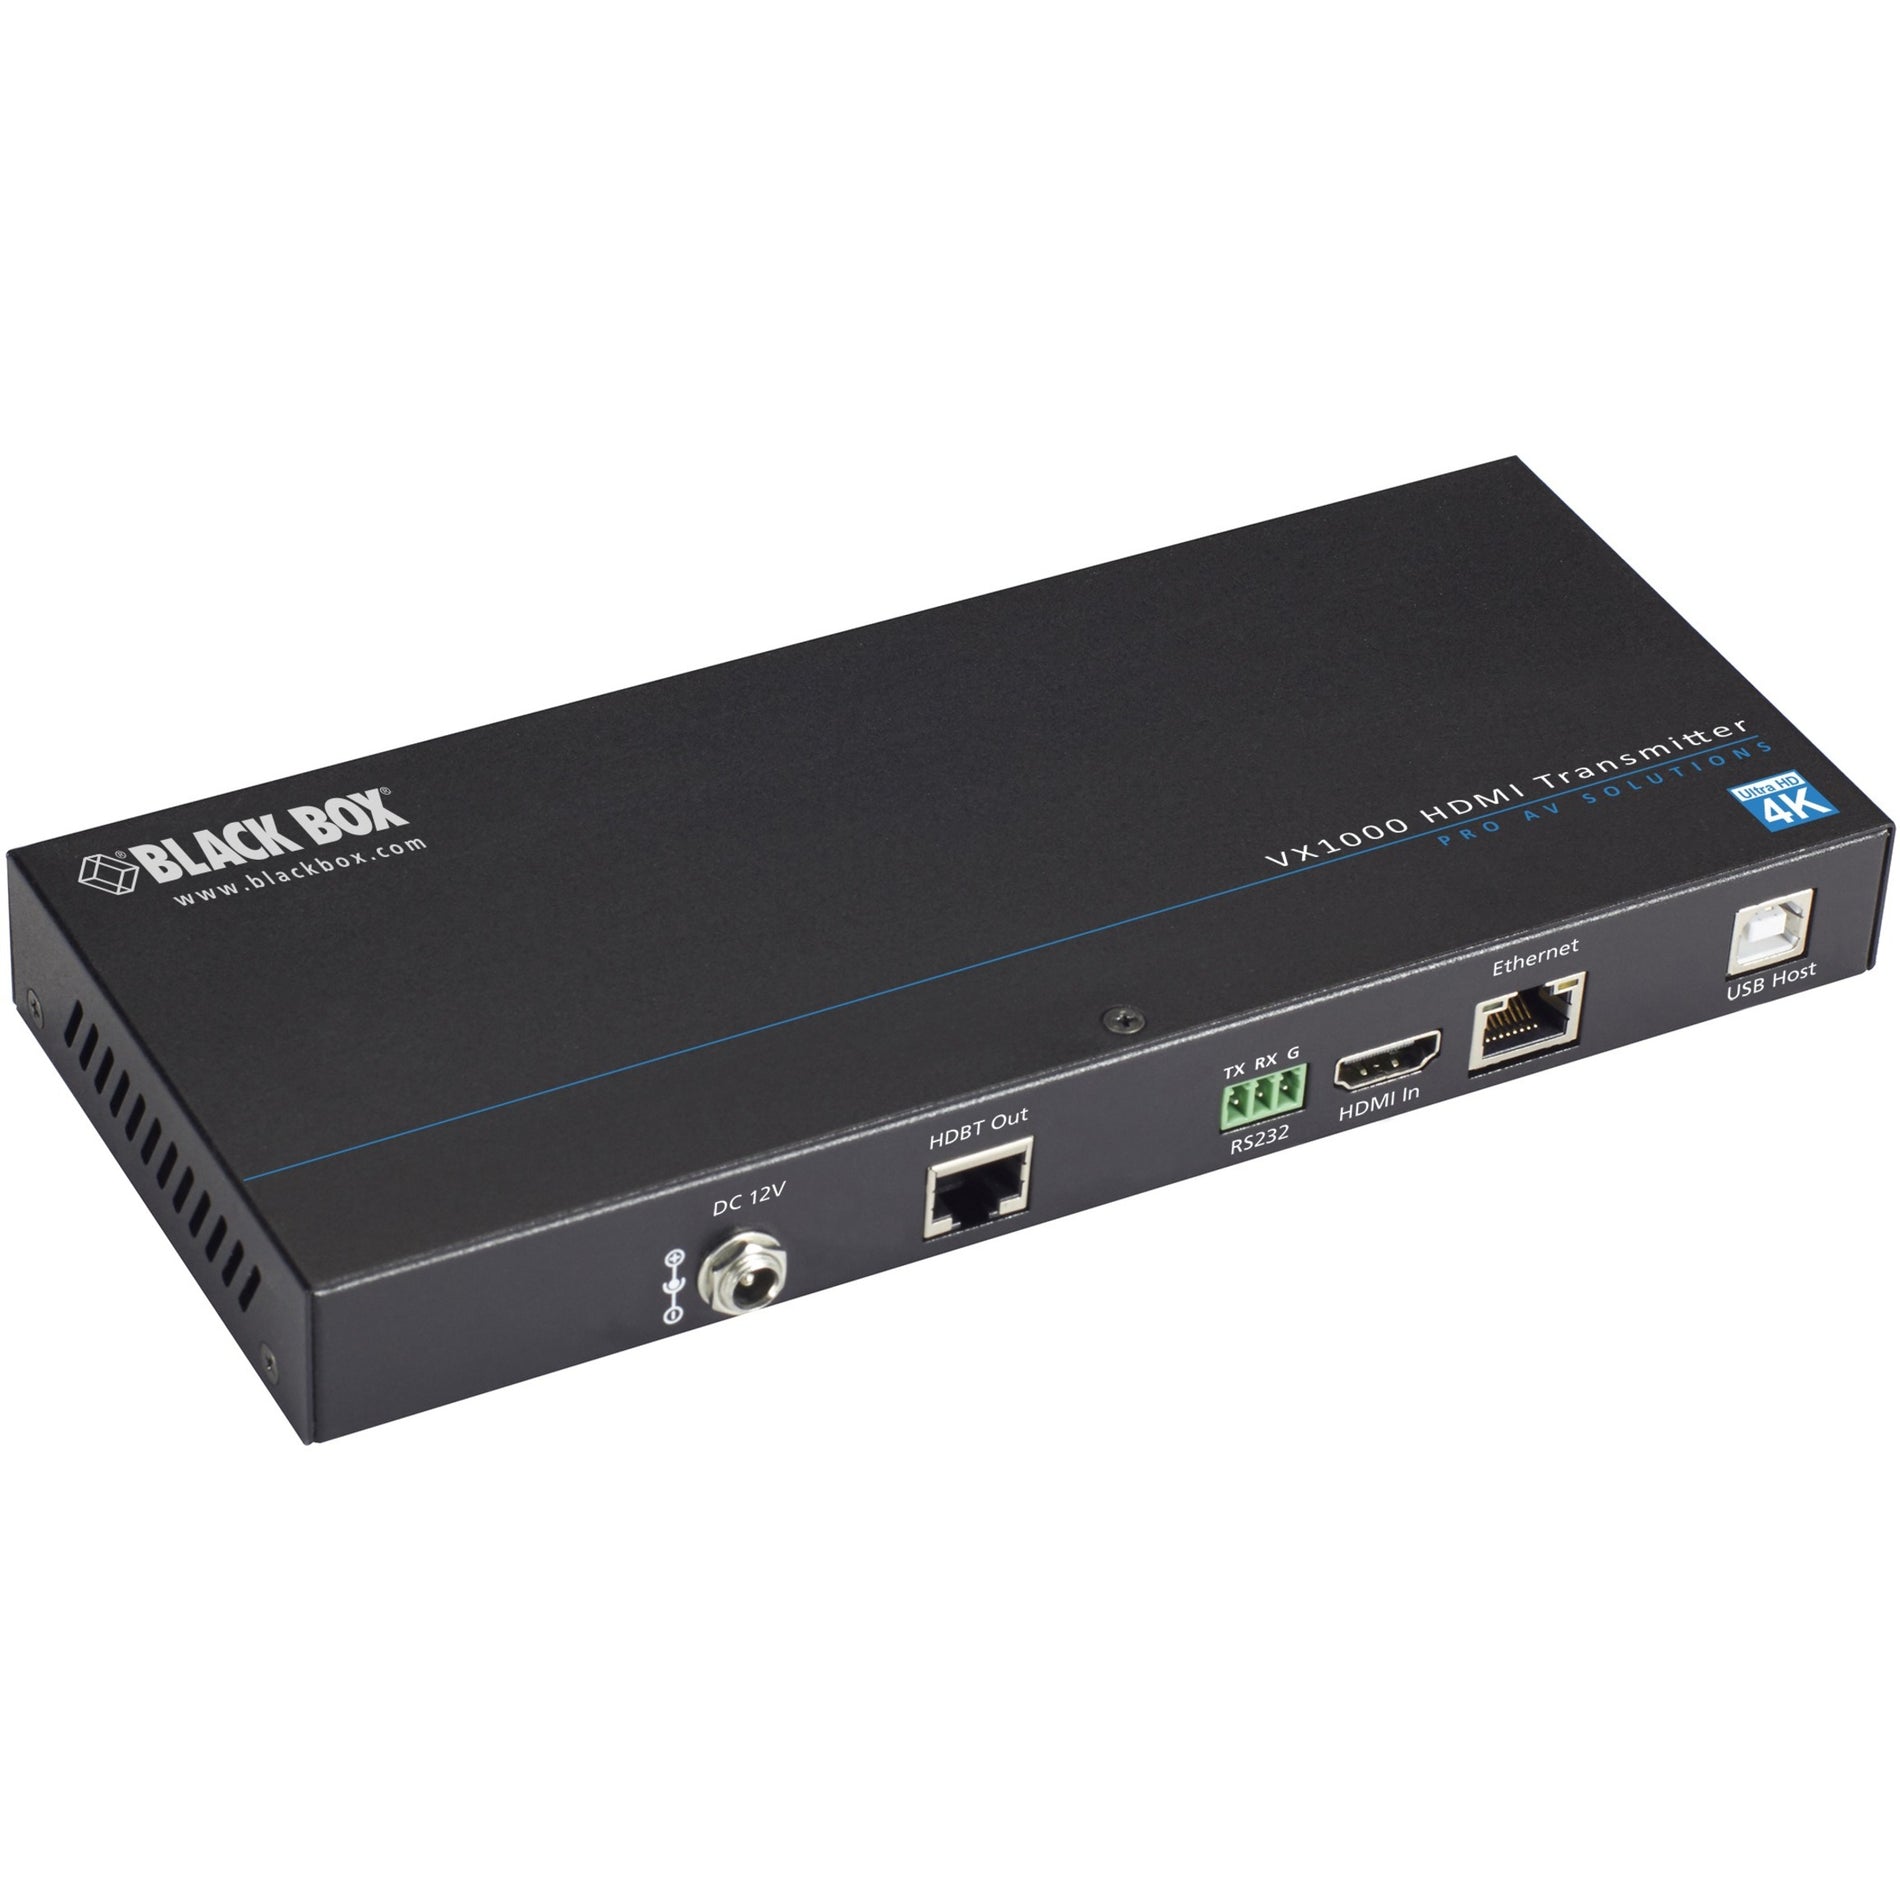 Black Box VX-1001-TX VX1000 Series HDMI Extender Transmitter - 4K, CATx, USB, 330 ft Range